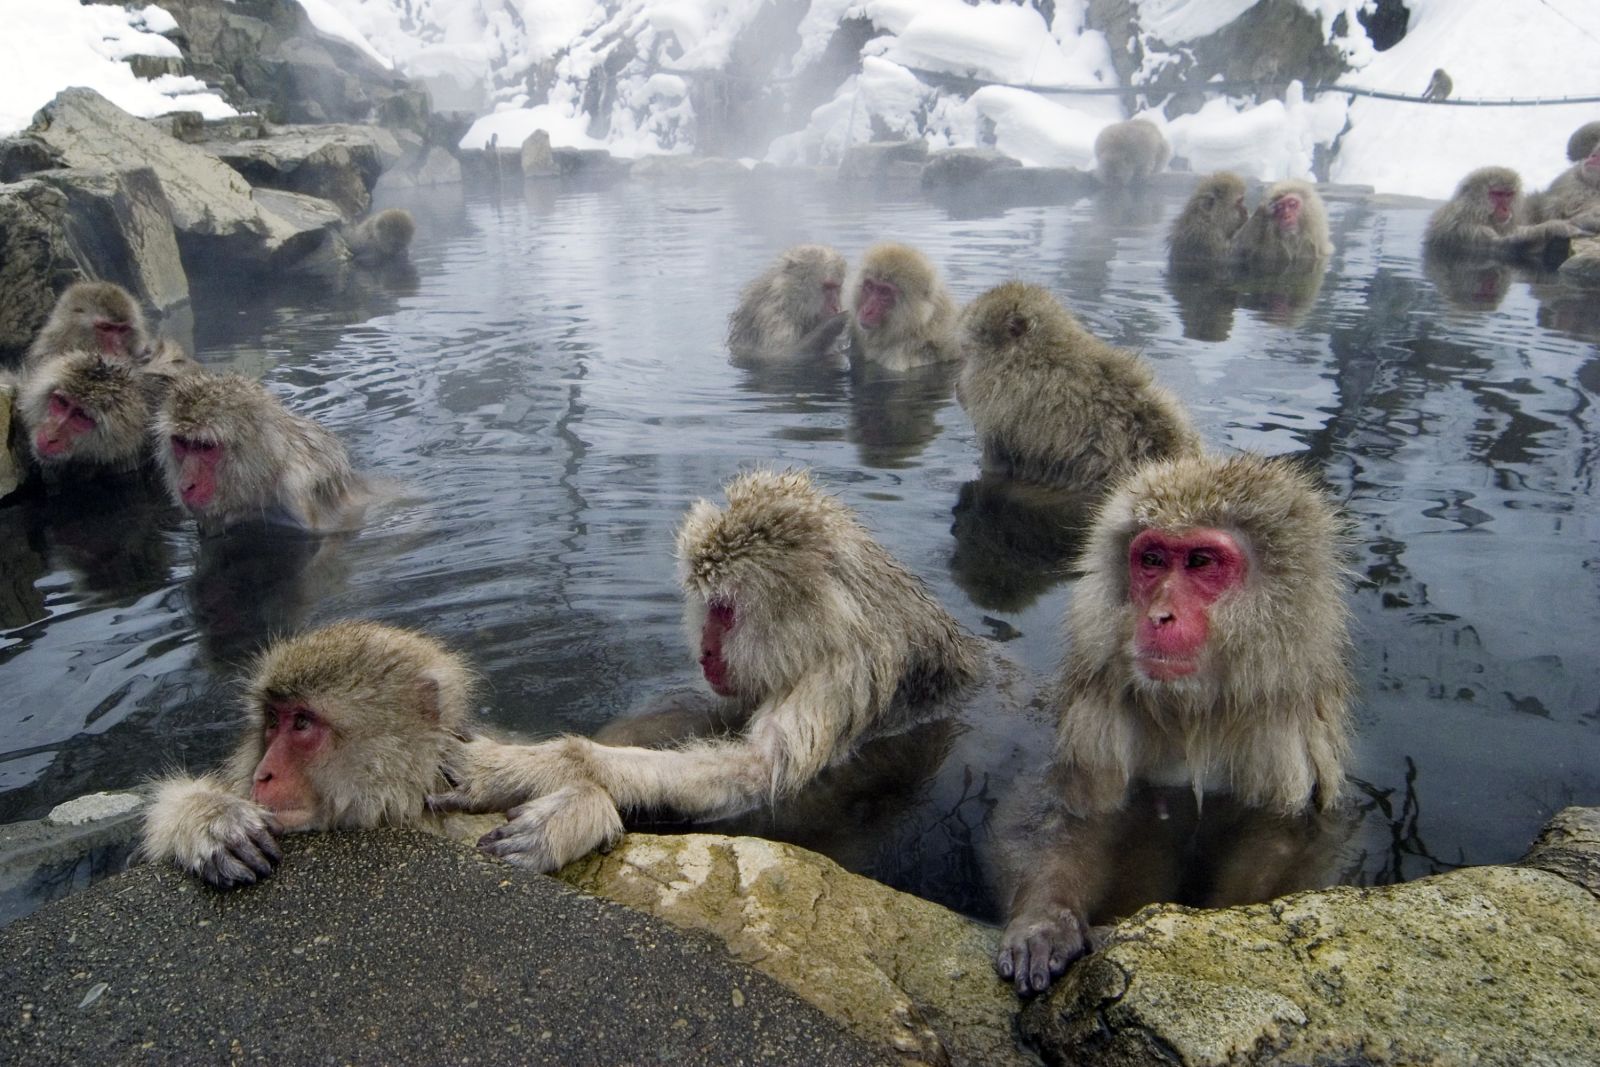 Япония купаться. Парк обезьян Джигокудани. Парк снежных обезьян Джигокудани. Парк Джигокудани Япония. Парк обезьян Джигокудани в Японии.